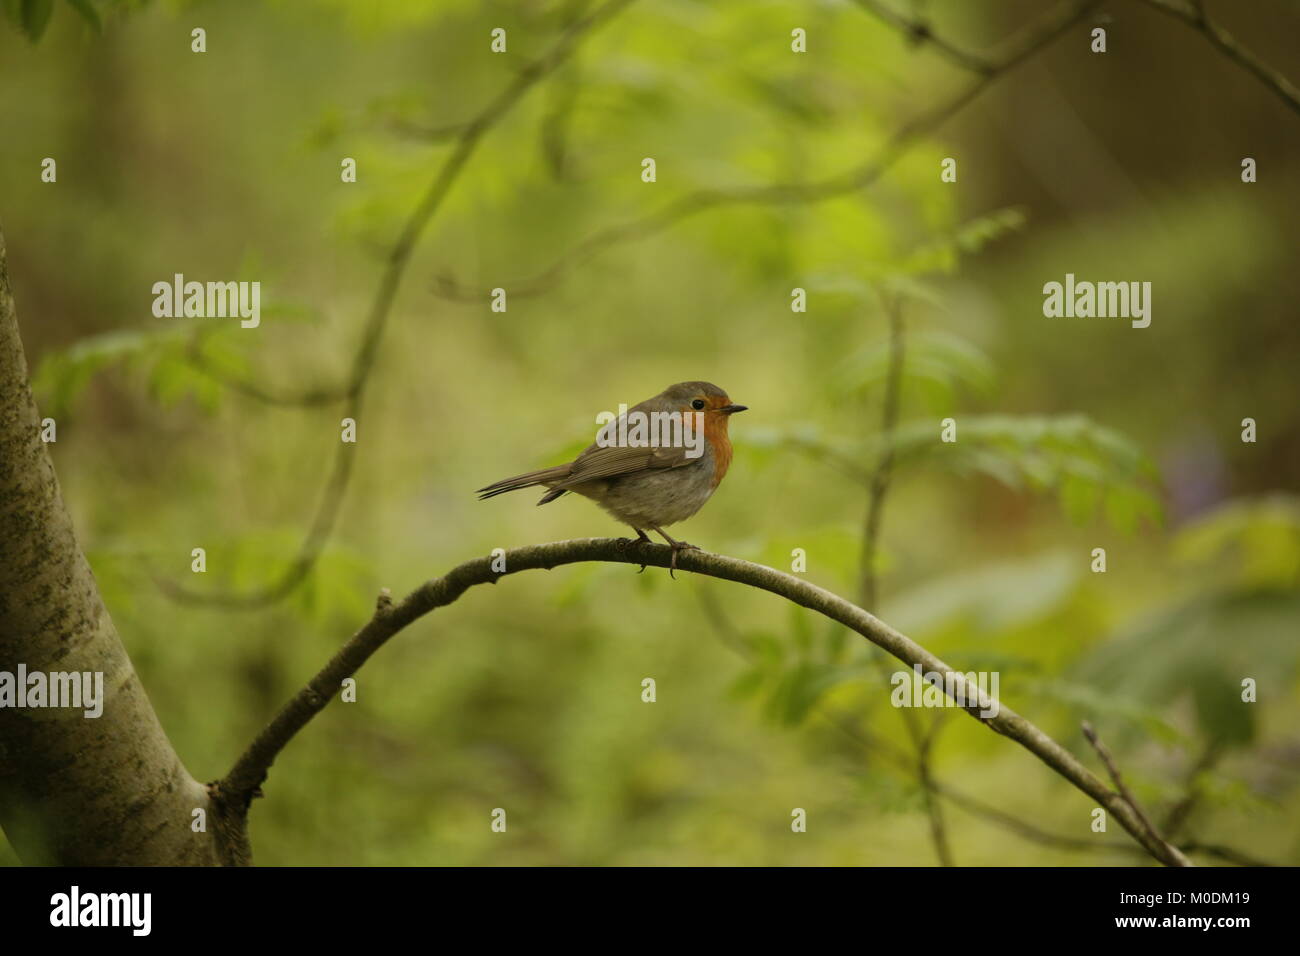 Robin Redbreast a welcome winterbird Stock Photo